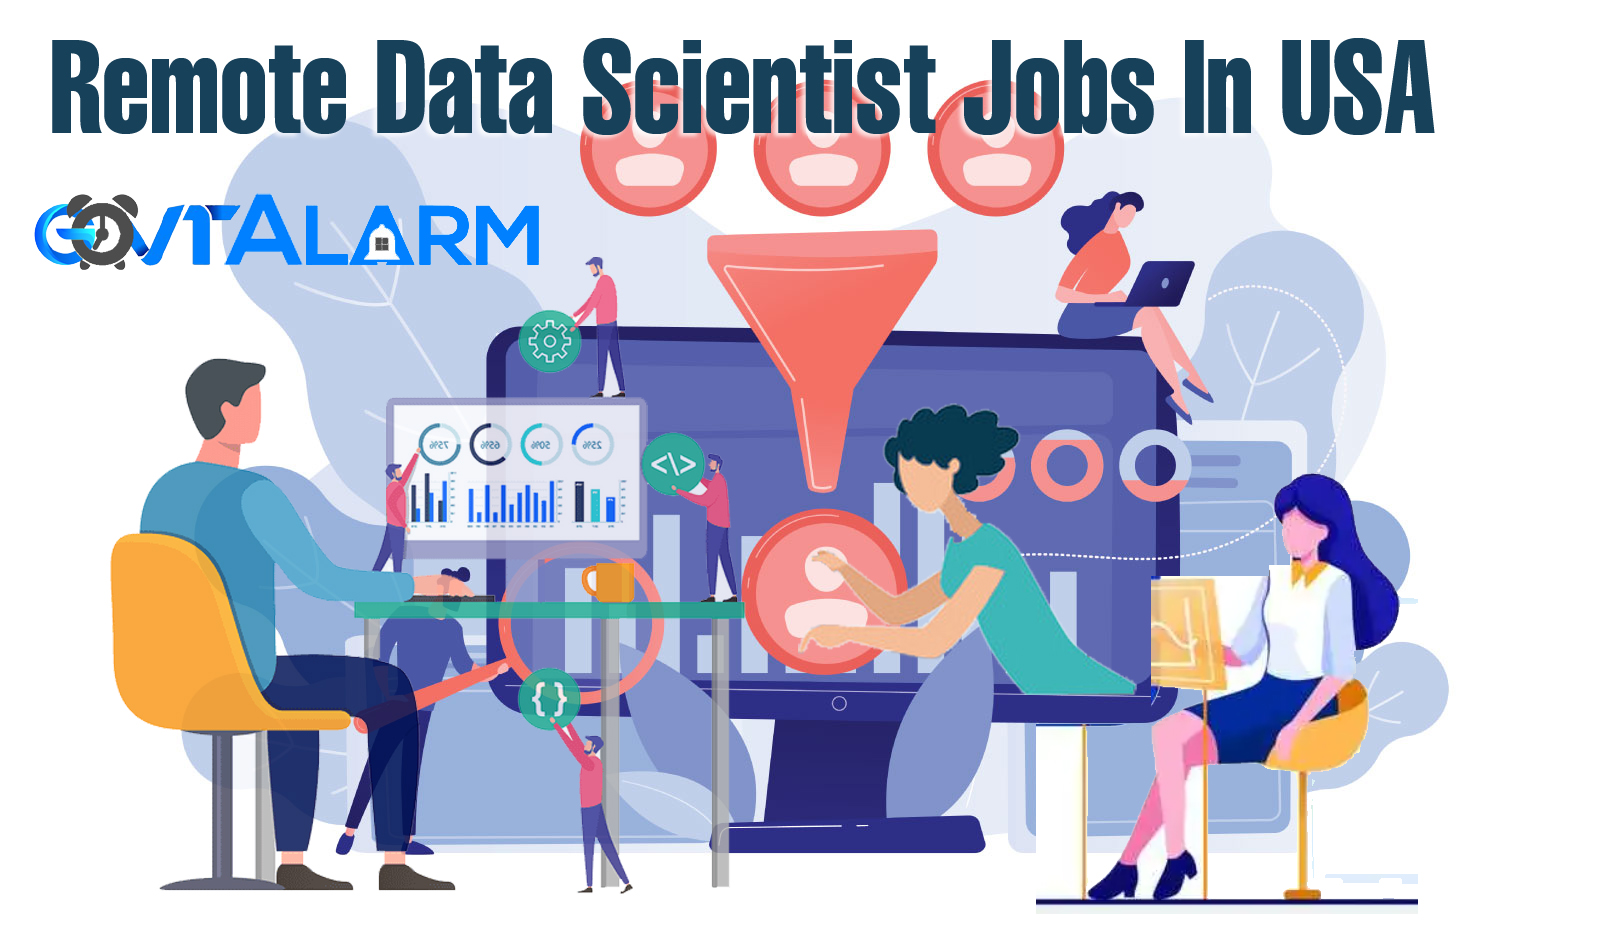 Remote Data Scientist Jobs In The USA